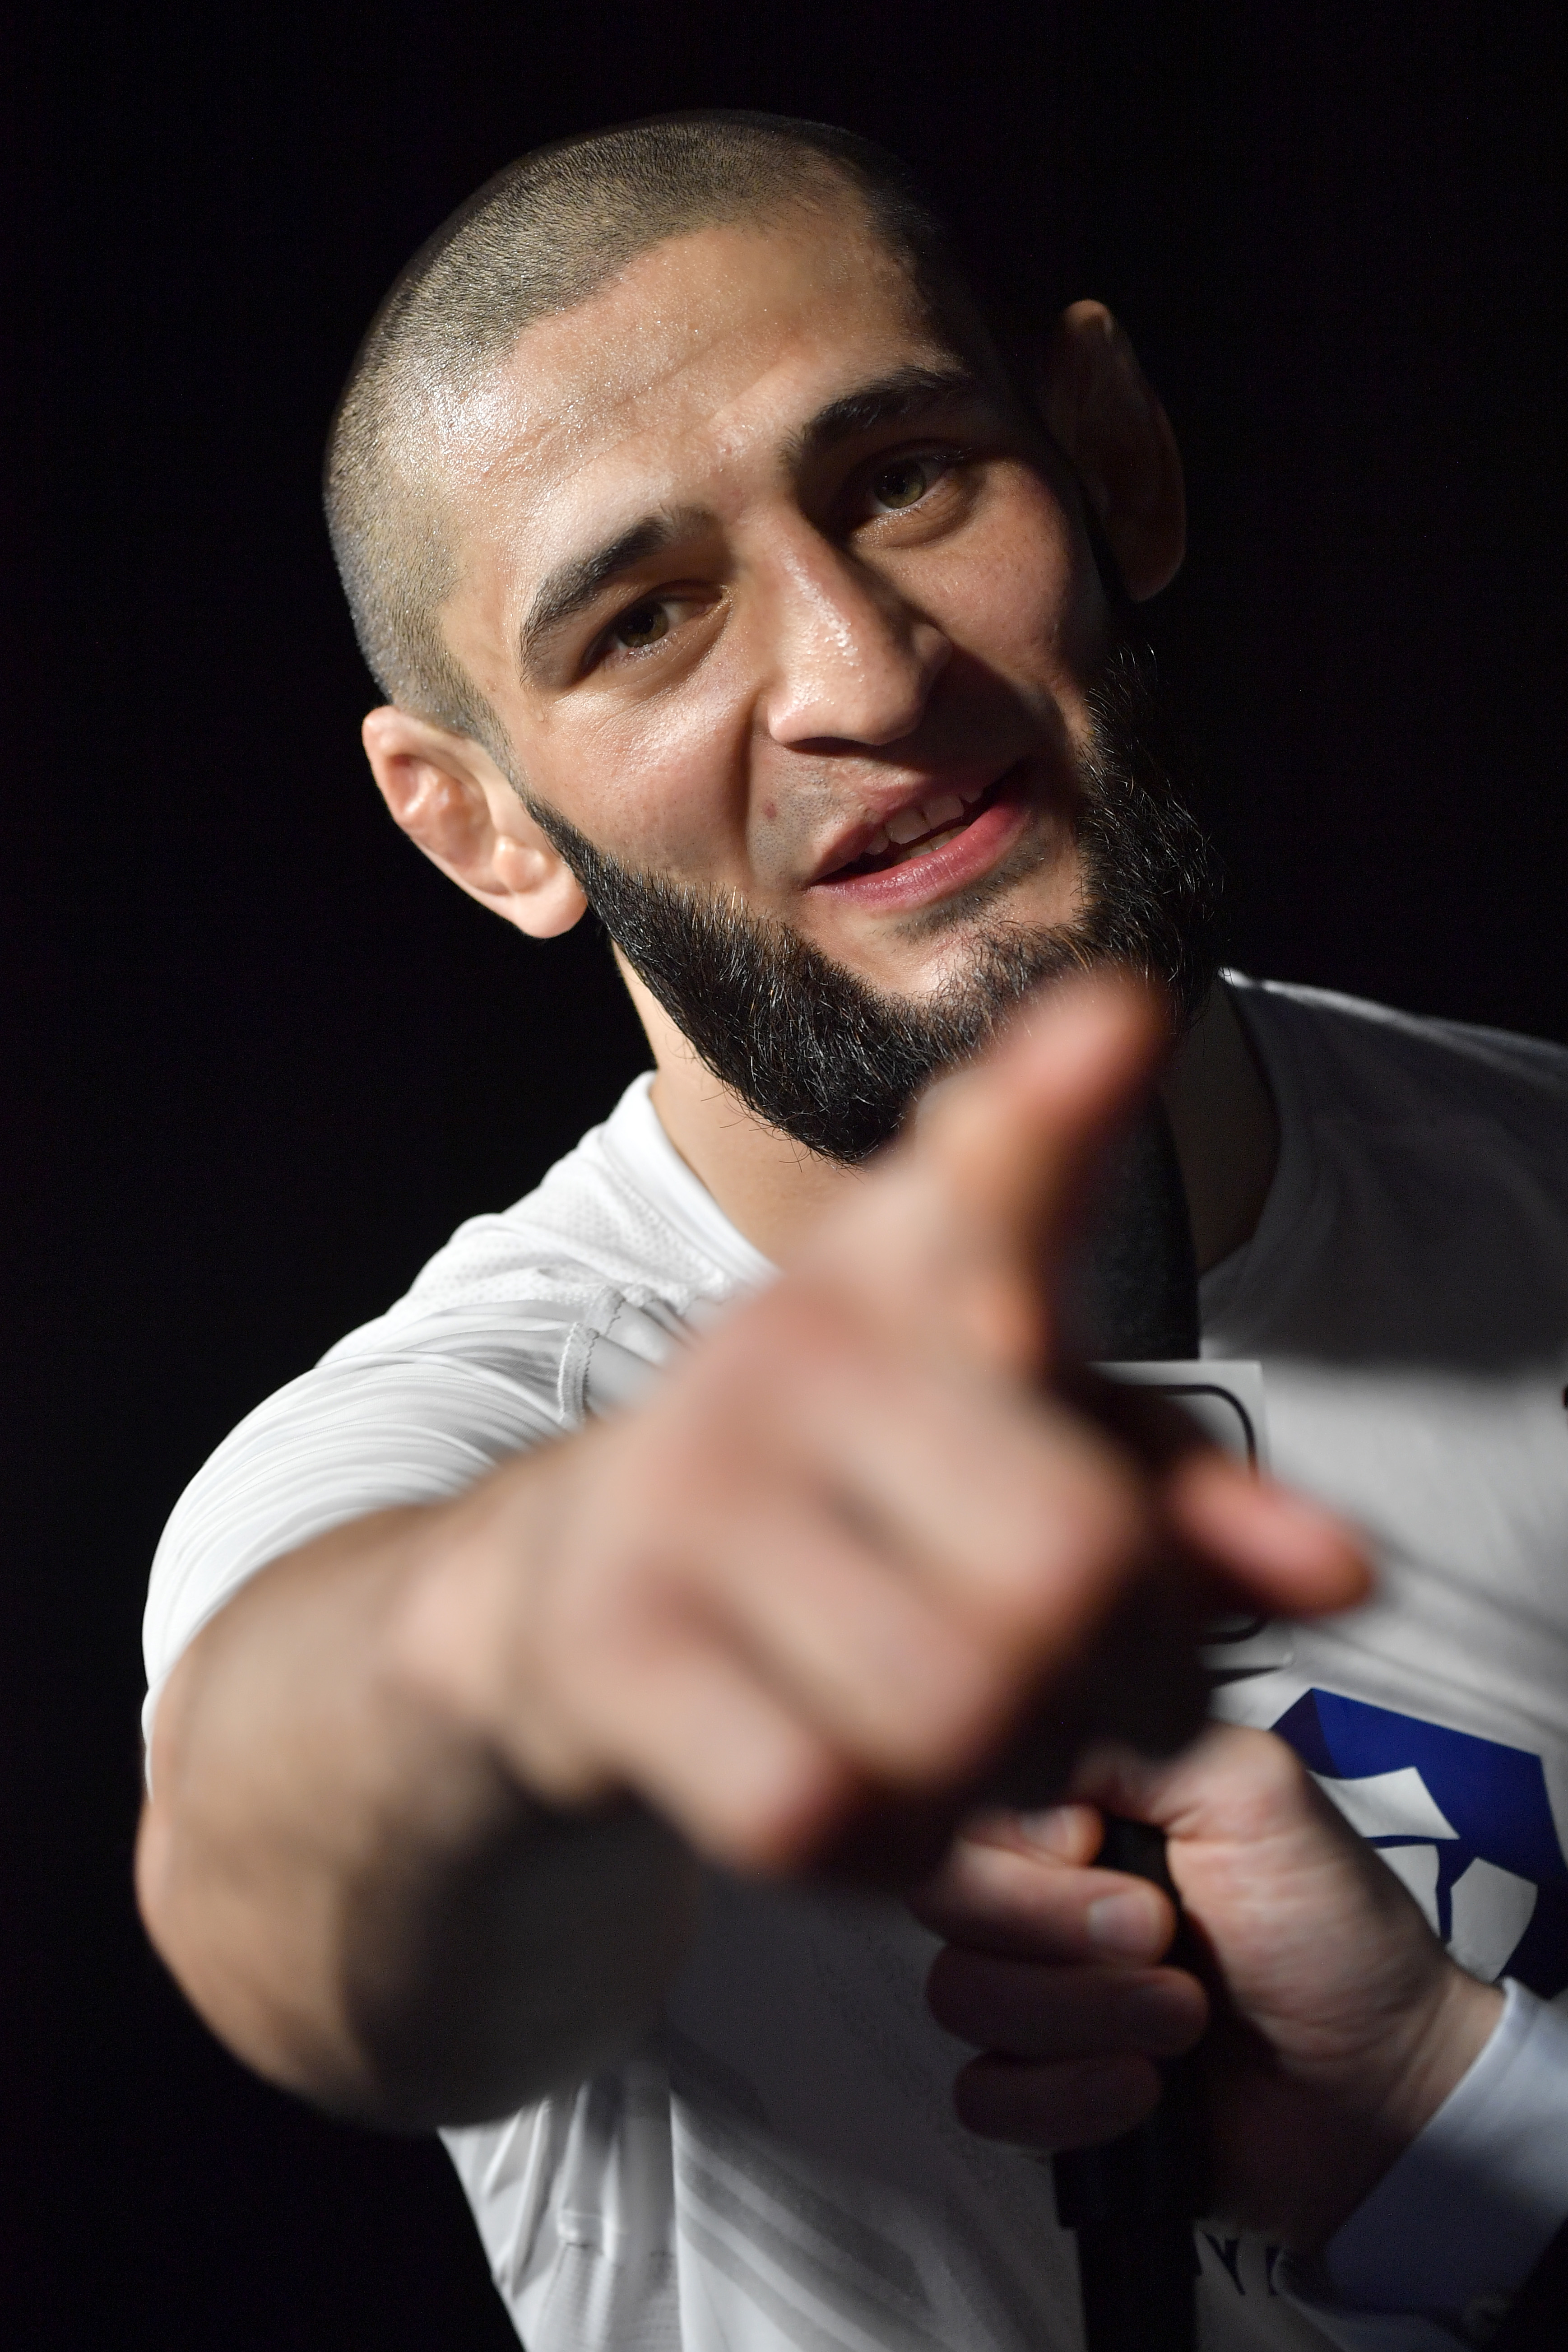 Khamzat Chimaev points at the camera after defeating Li Jingliang at UFC 267.